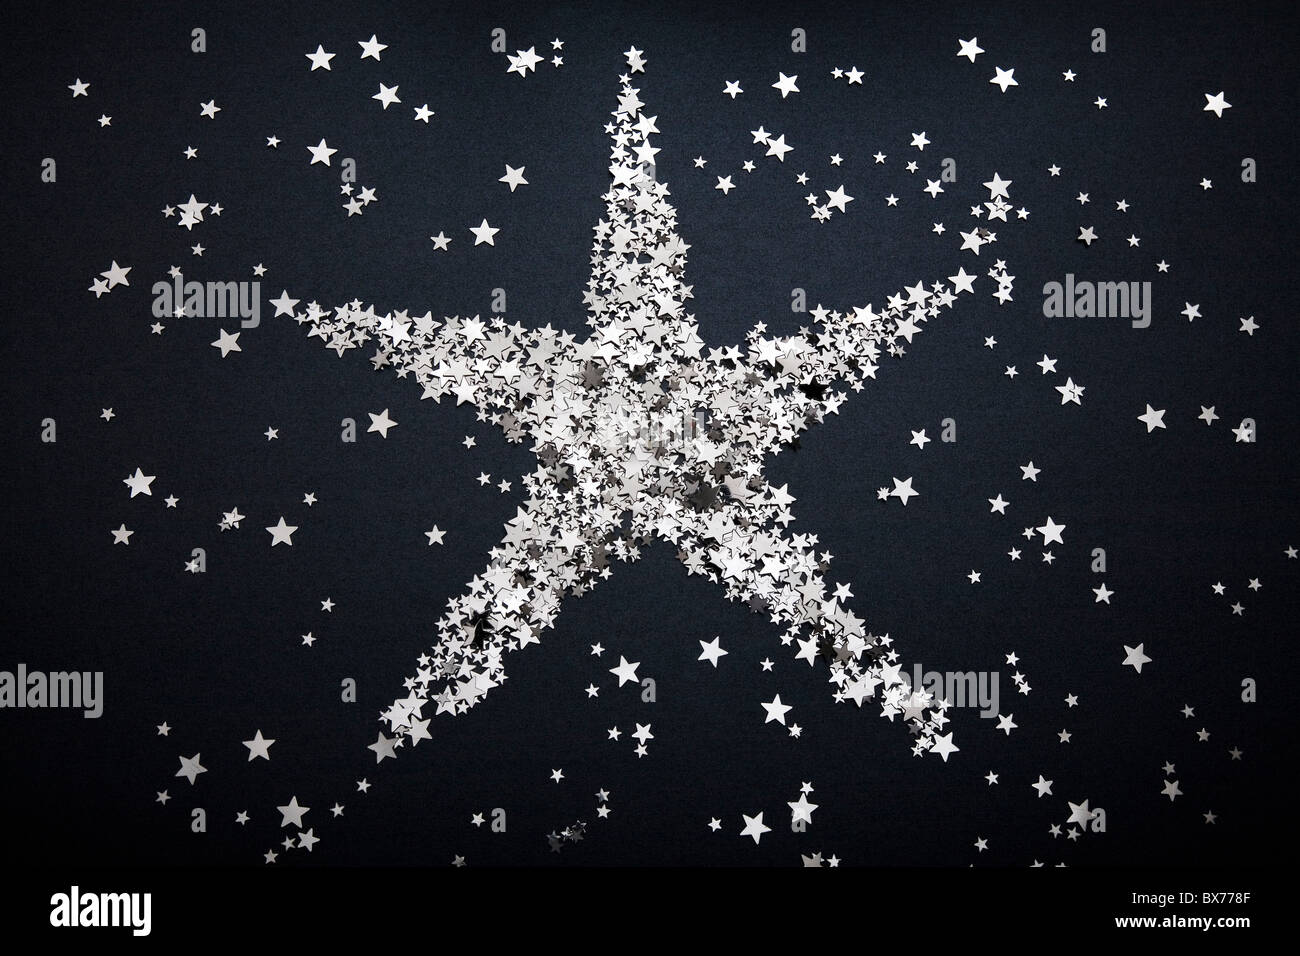 Star shape made of small stars Stock Photo